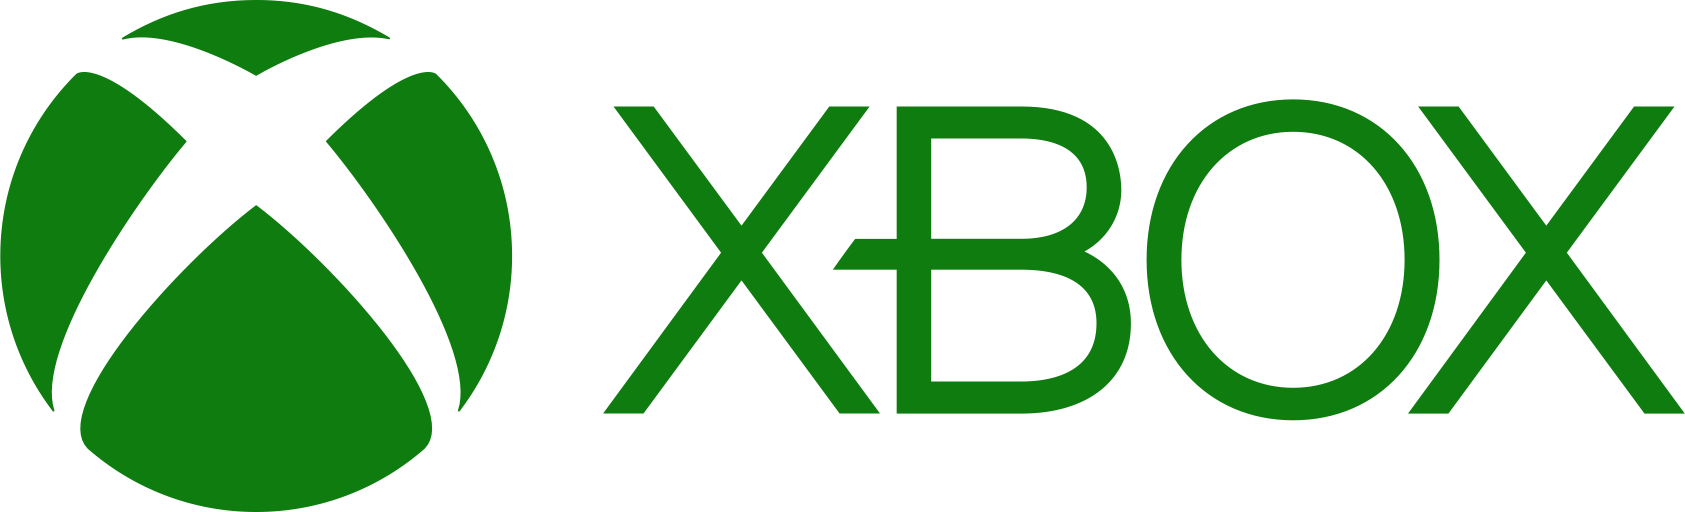 Gambar Xbox Transparan